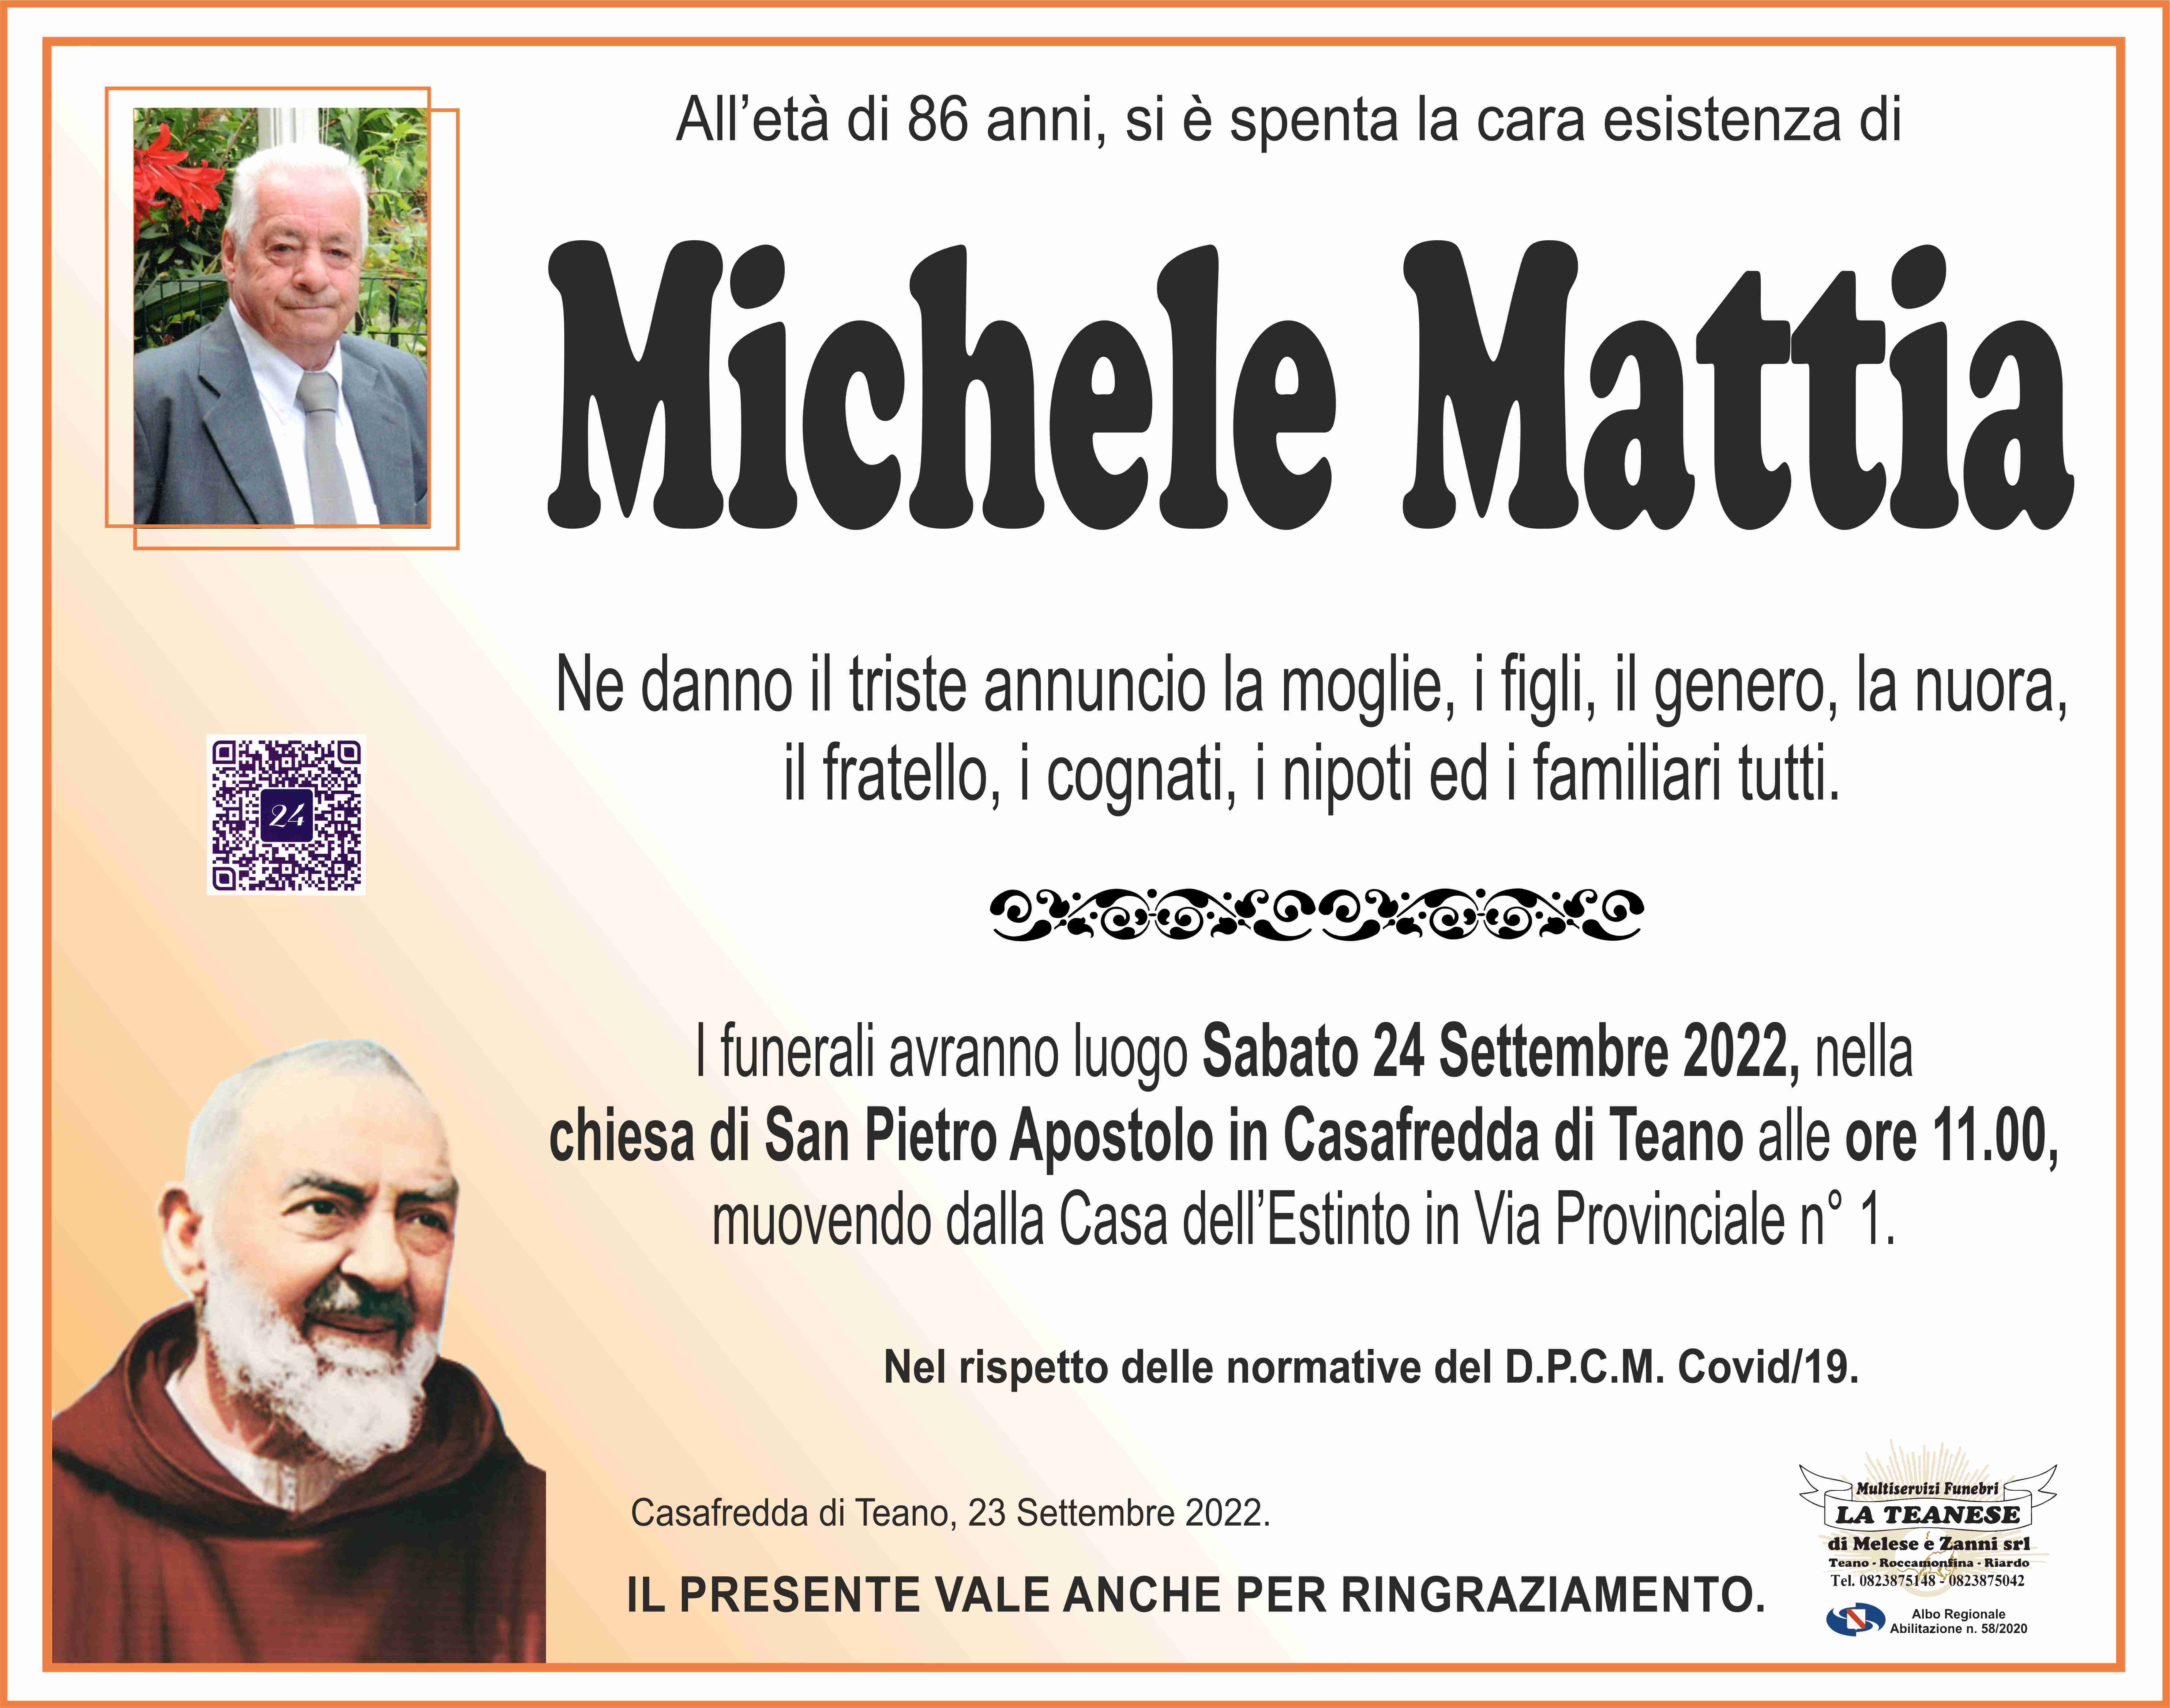 Michele Mattia